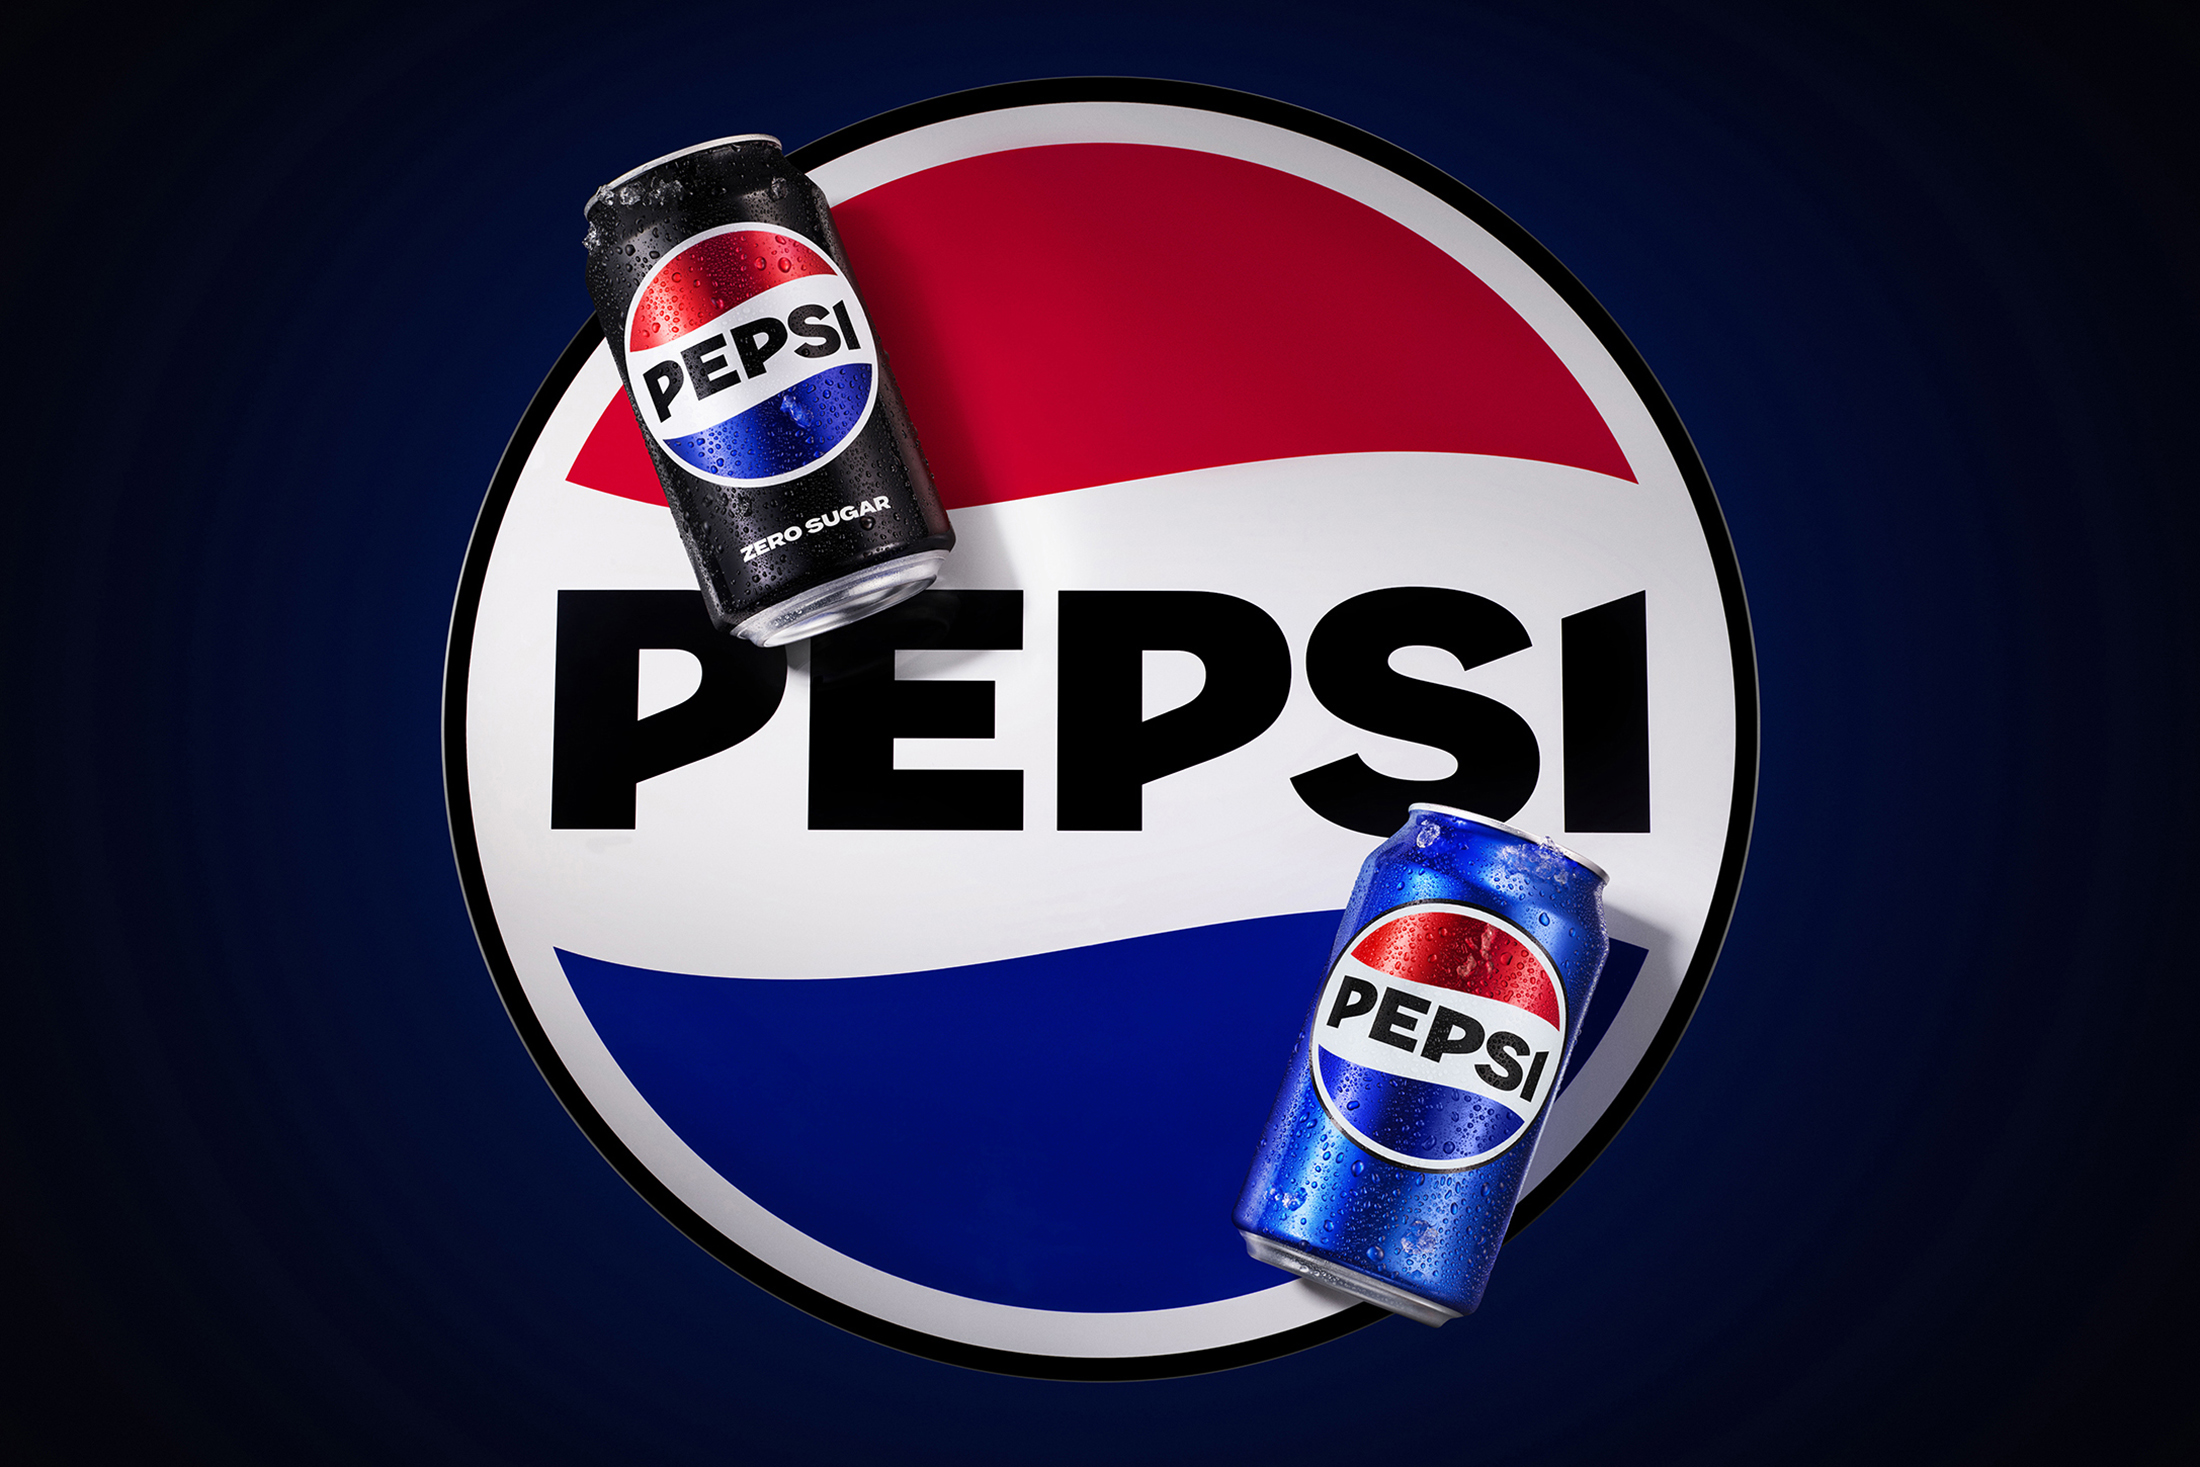 Pepsi26_Web